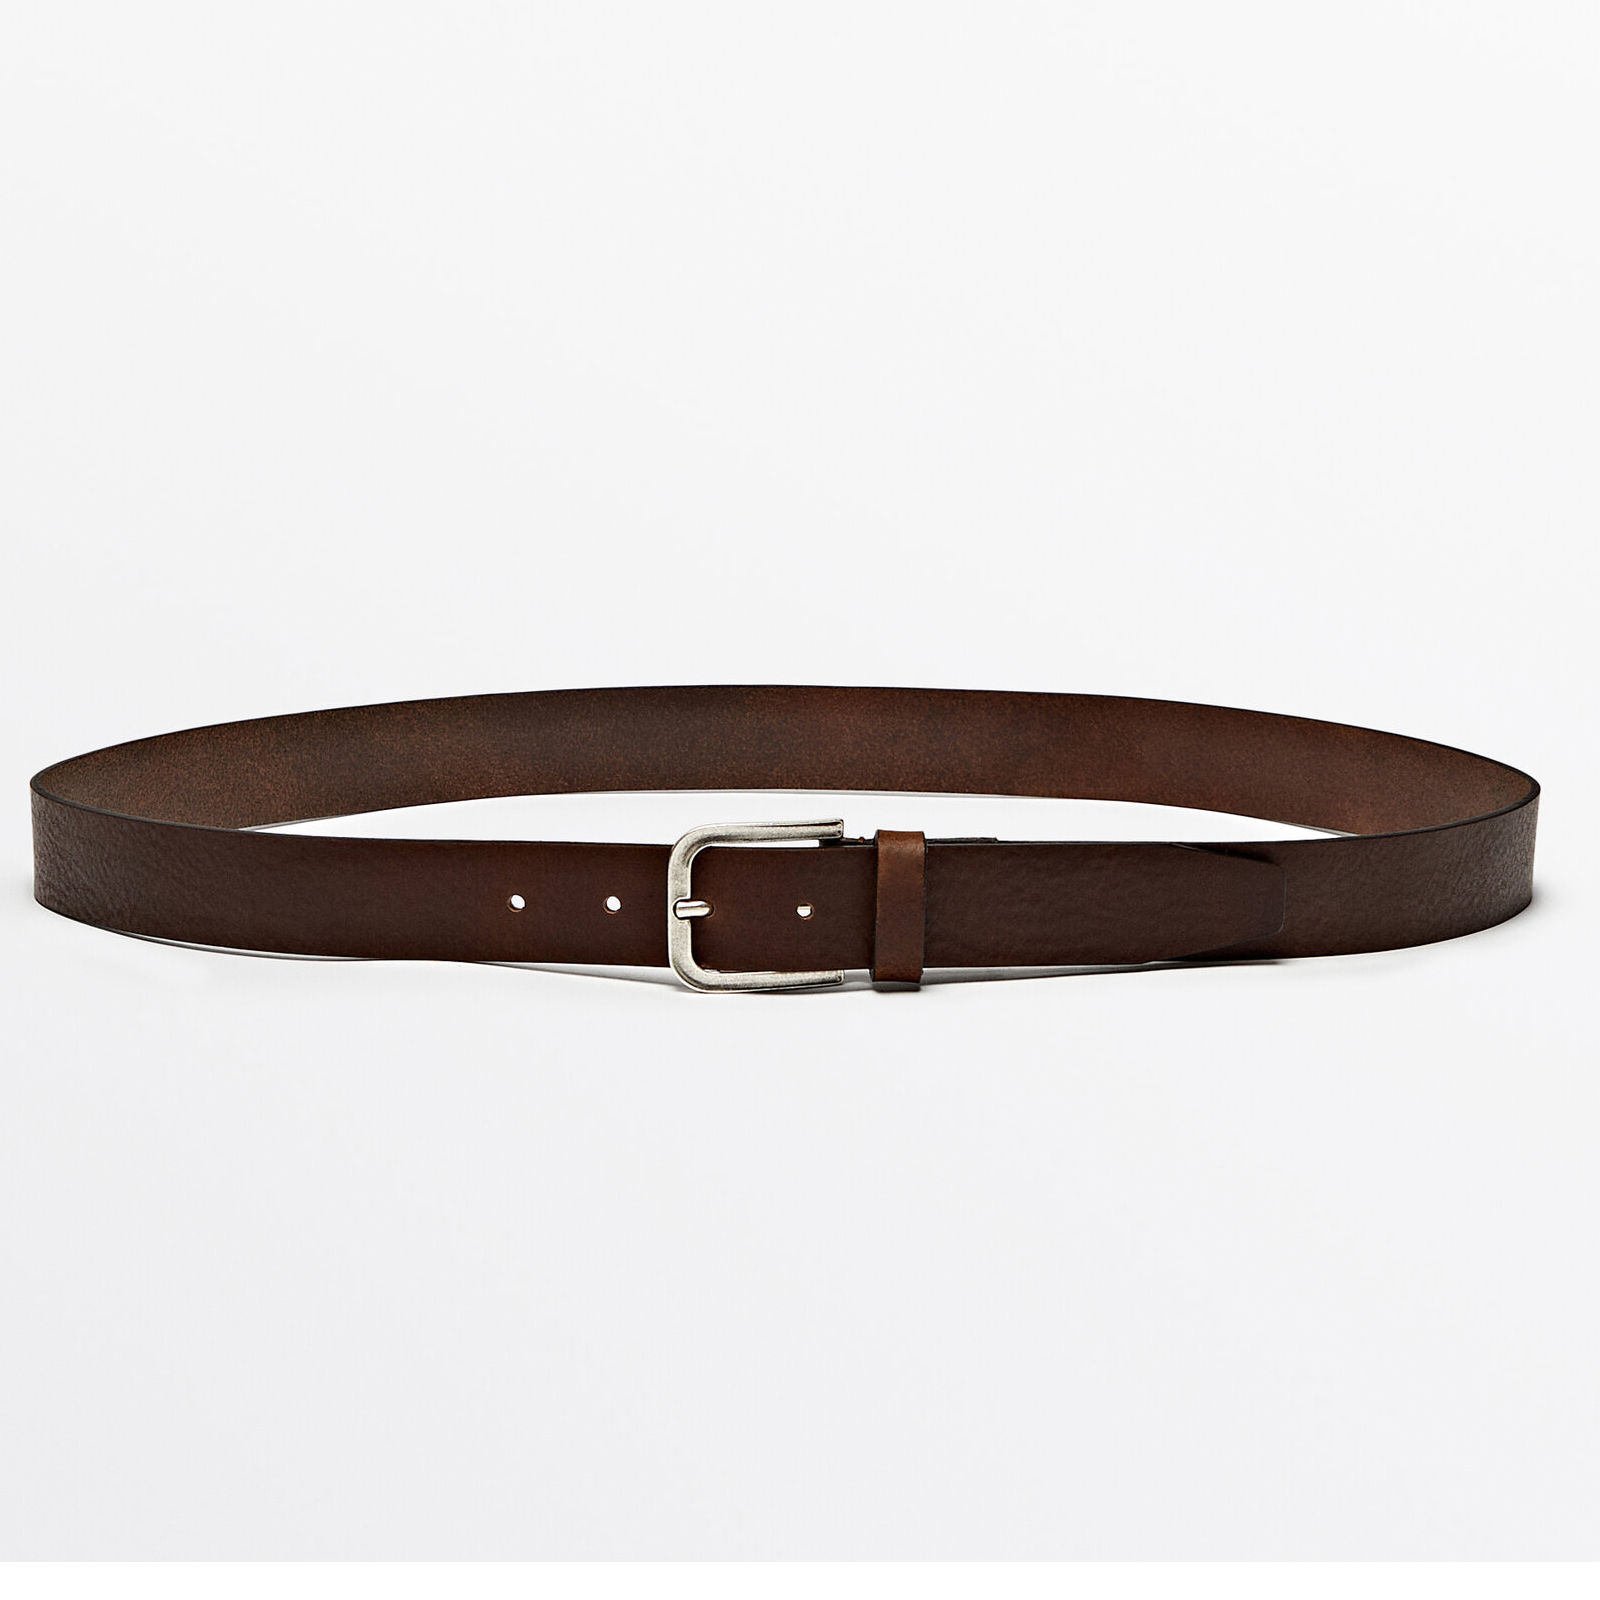 Ремень Massimo Dutti Nappa Leather, коричневый ремень massimo dutti braided leather коричневый